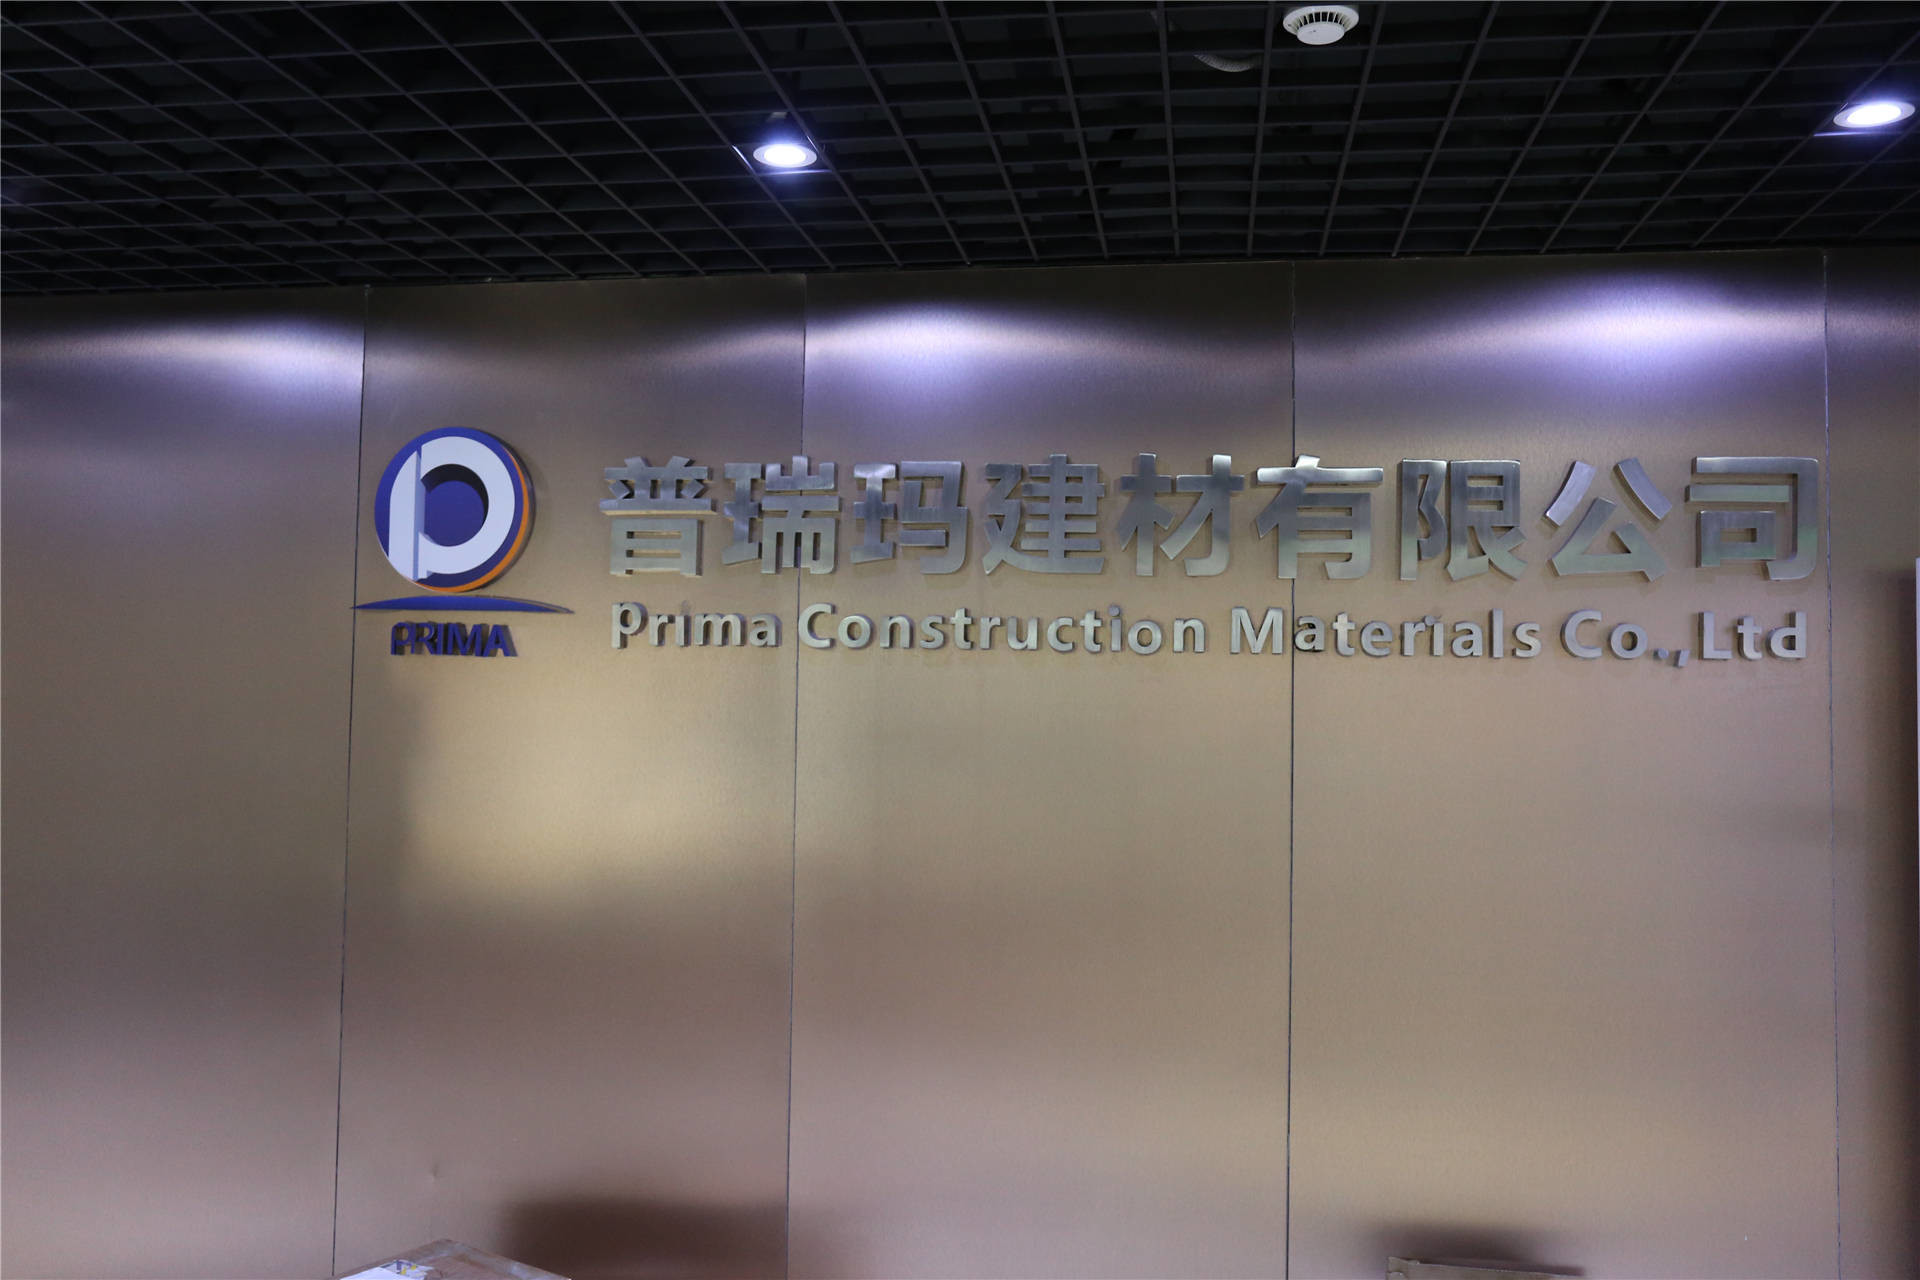 Shenzhen Prima Construction Materials Co., Ltd.